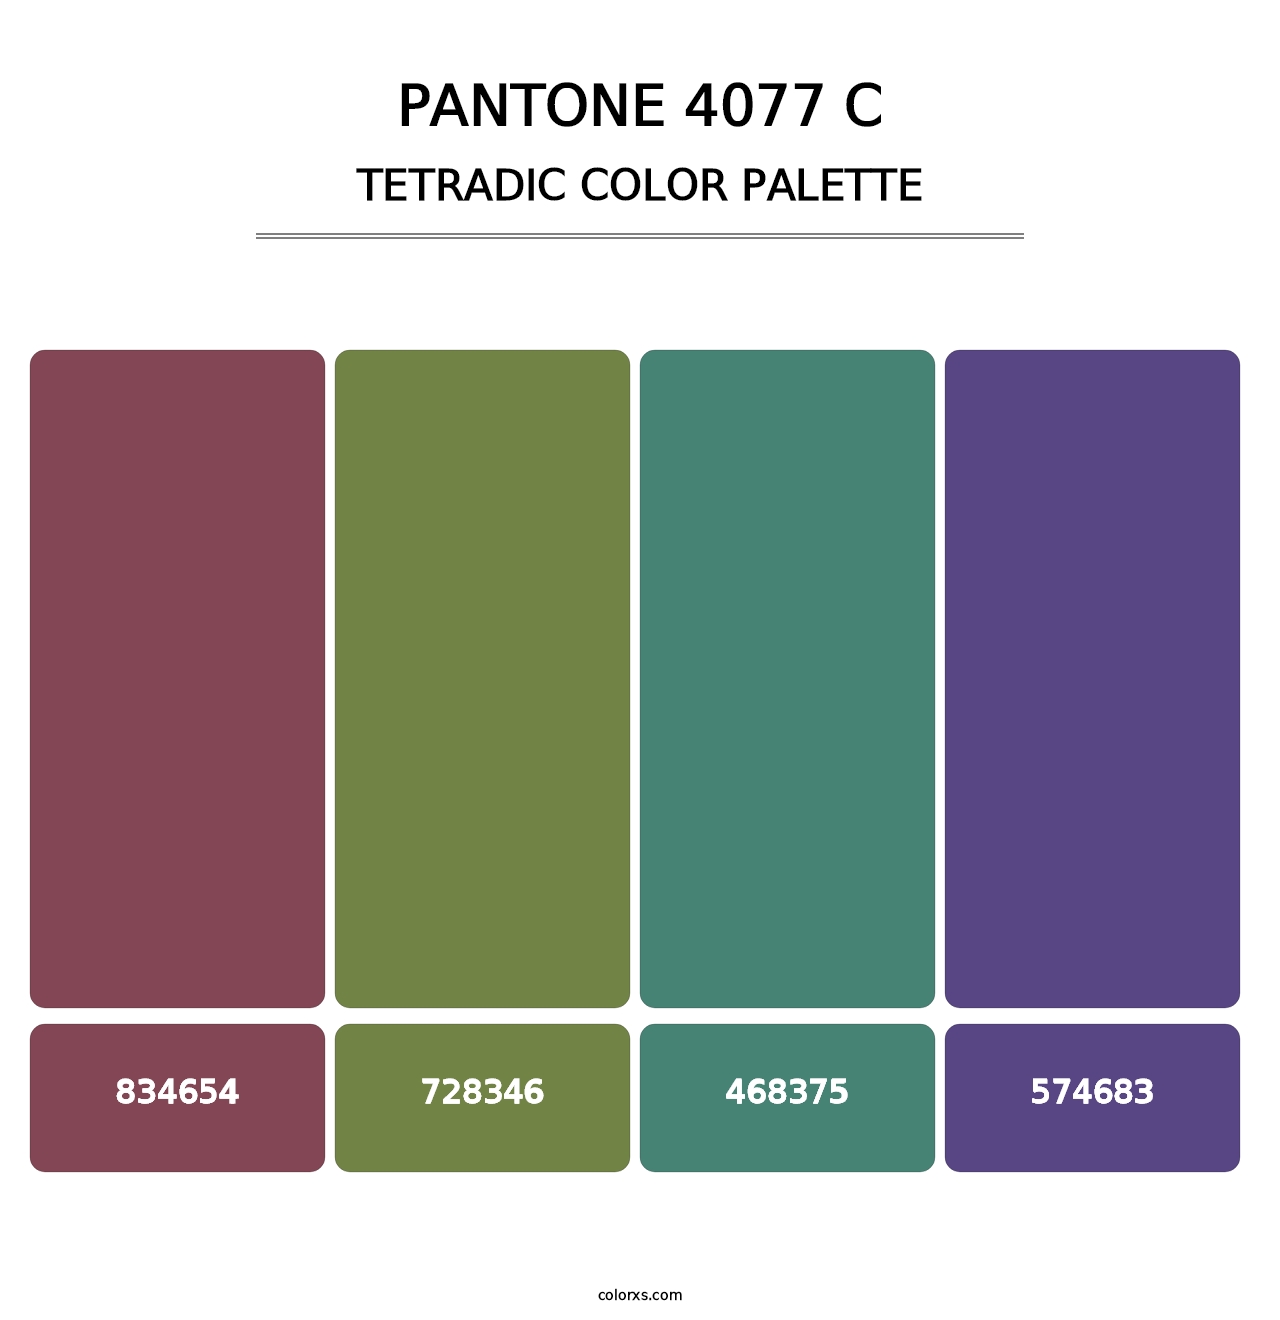 PANTONE 4077 C - Tetradic Color Palette